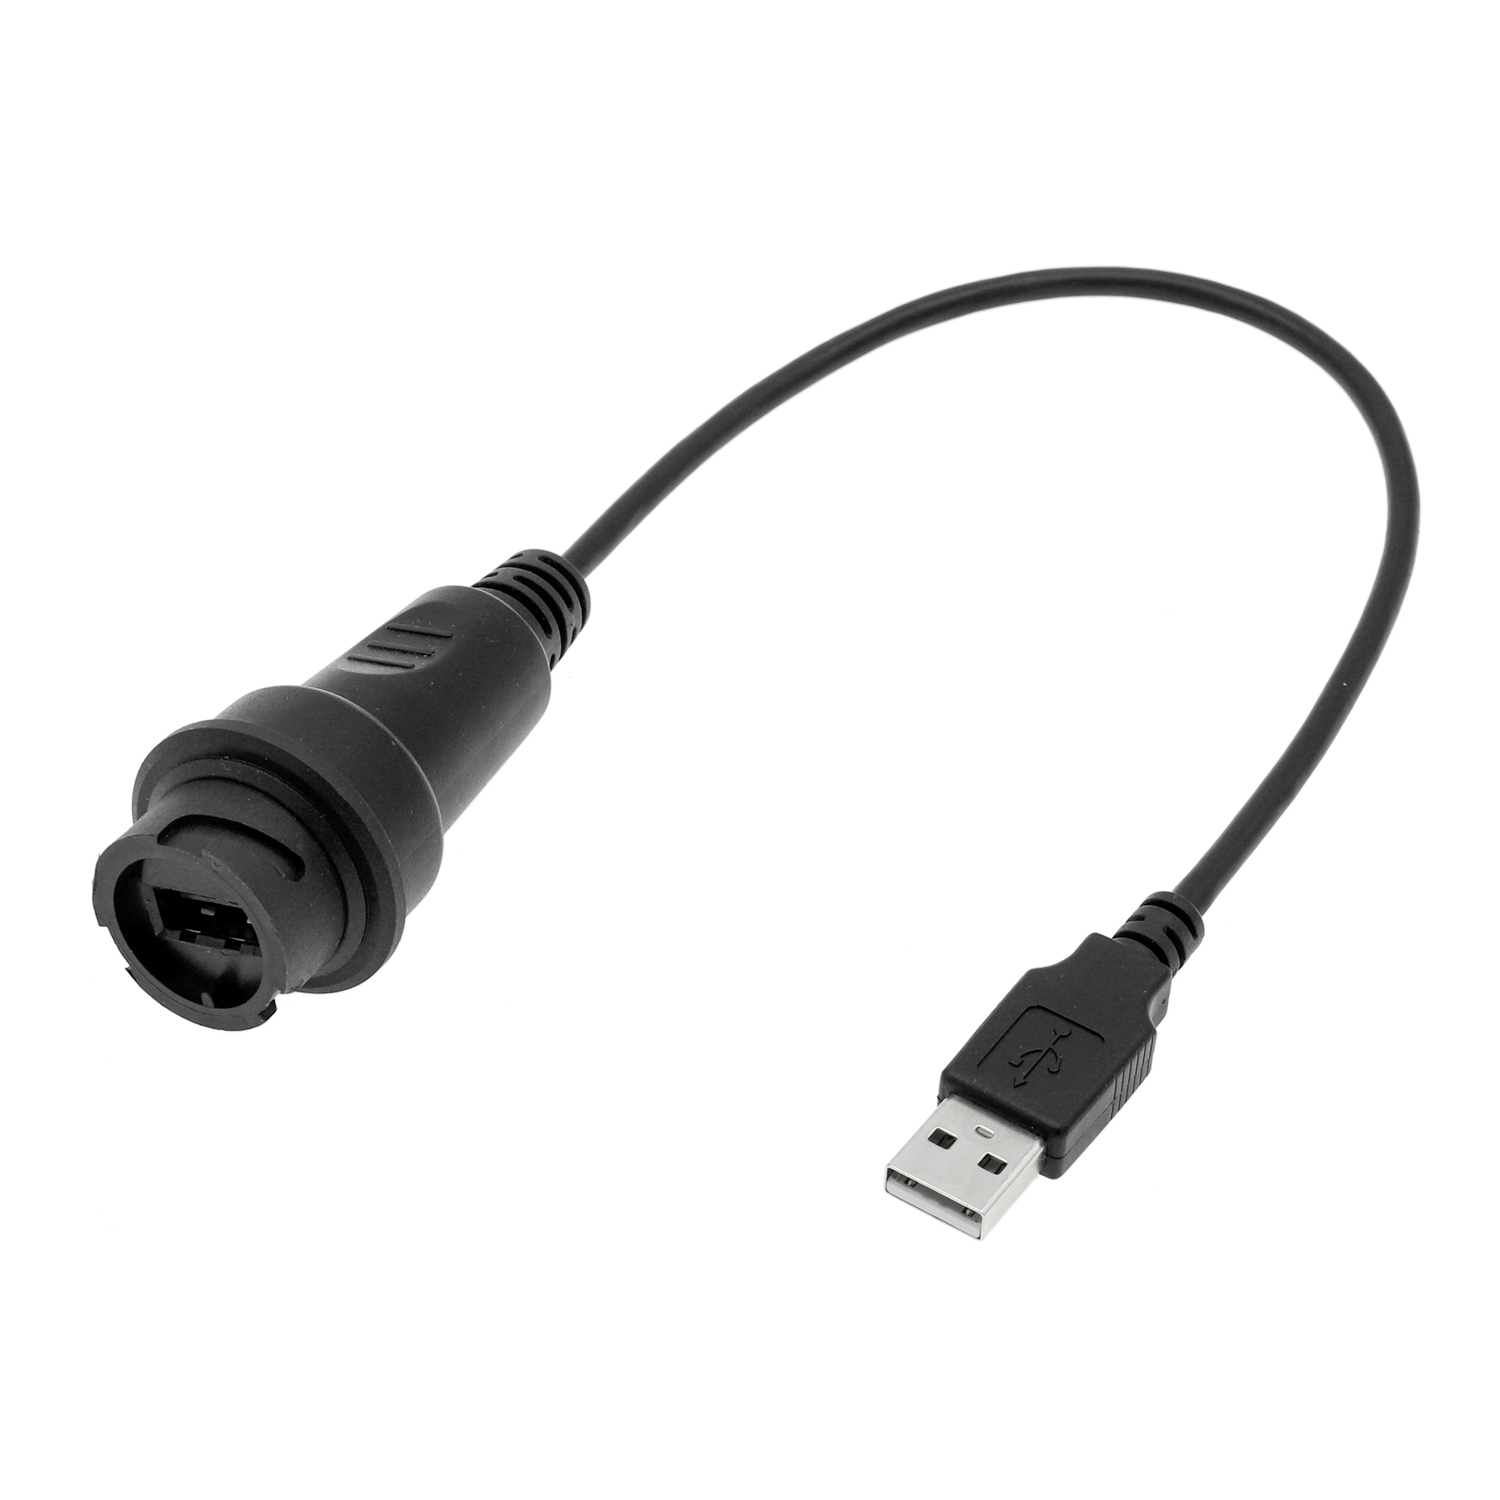 Cable HDMI a USB un conector impermeable macho para automóvil